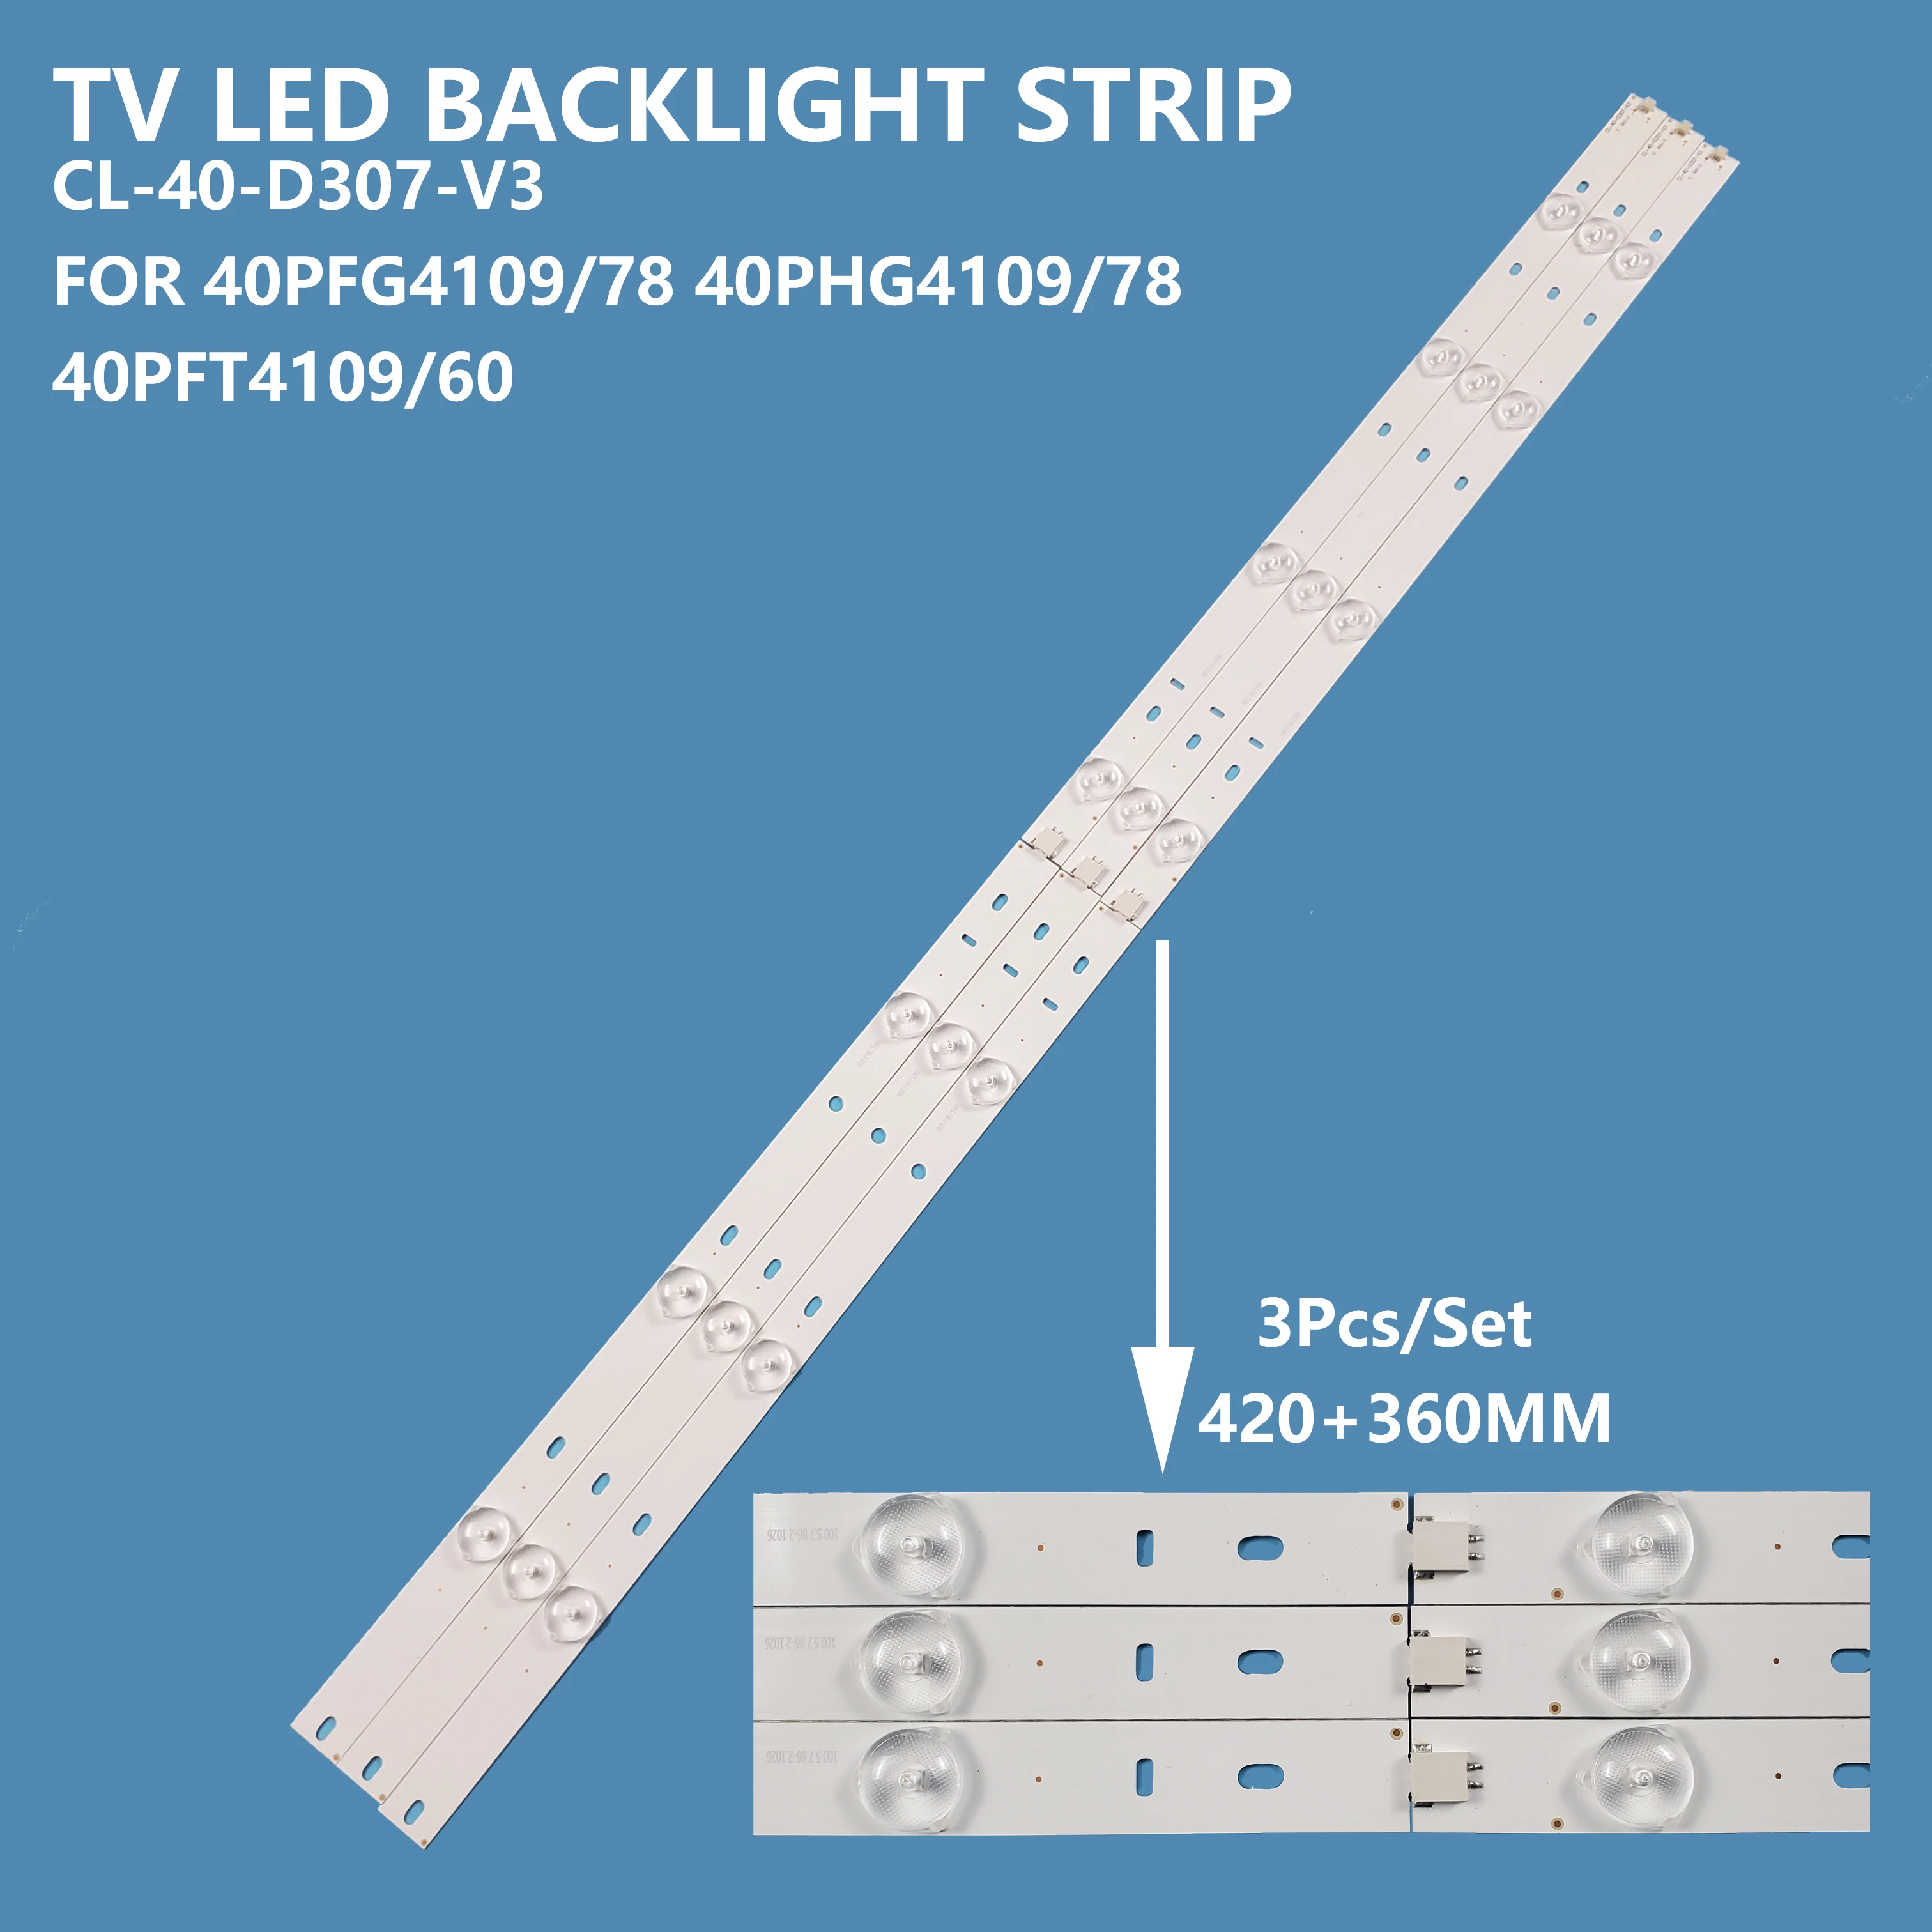 3Pcs/set Smart TV LED Backlight Bar Strip CL-40-D307-V3 For 40inch tv 40PFG4109/78 40PHG4109/7840PFT4109/60 Accessories Repair